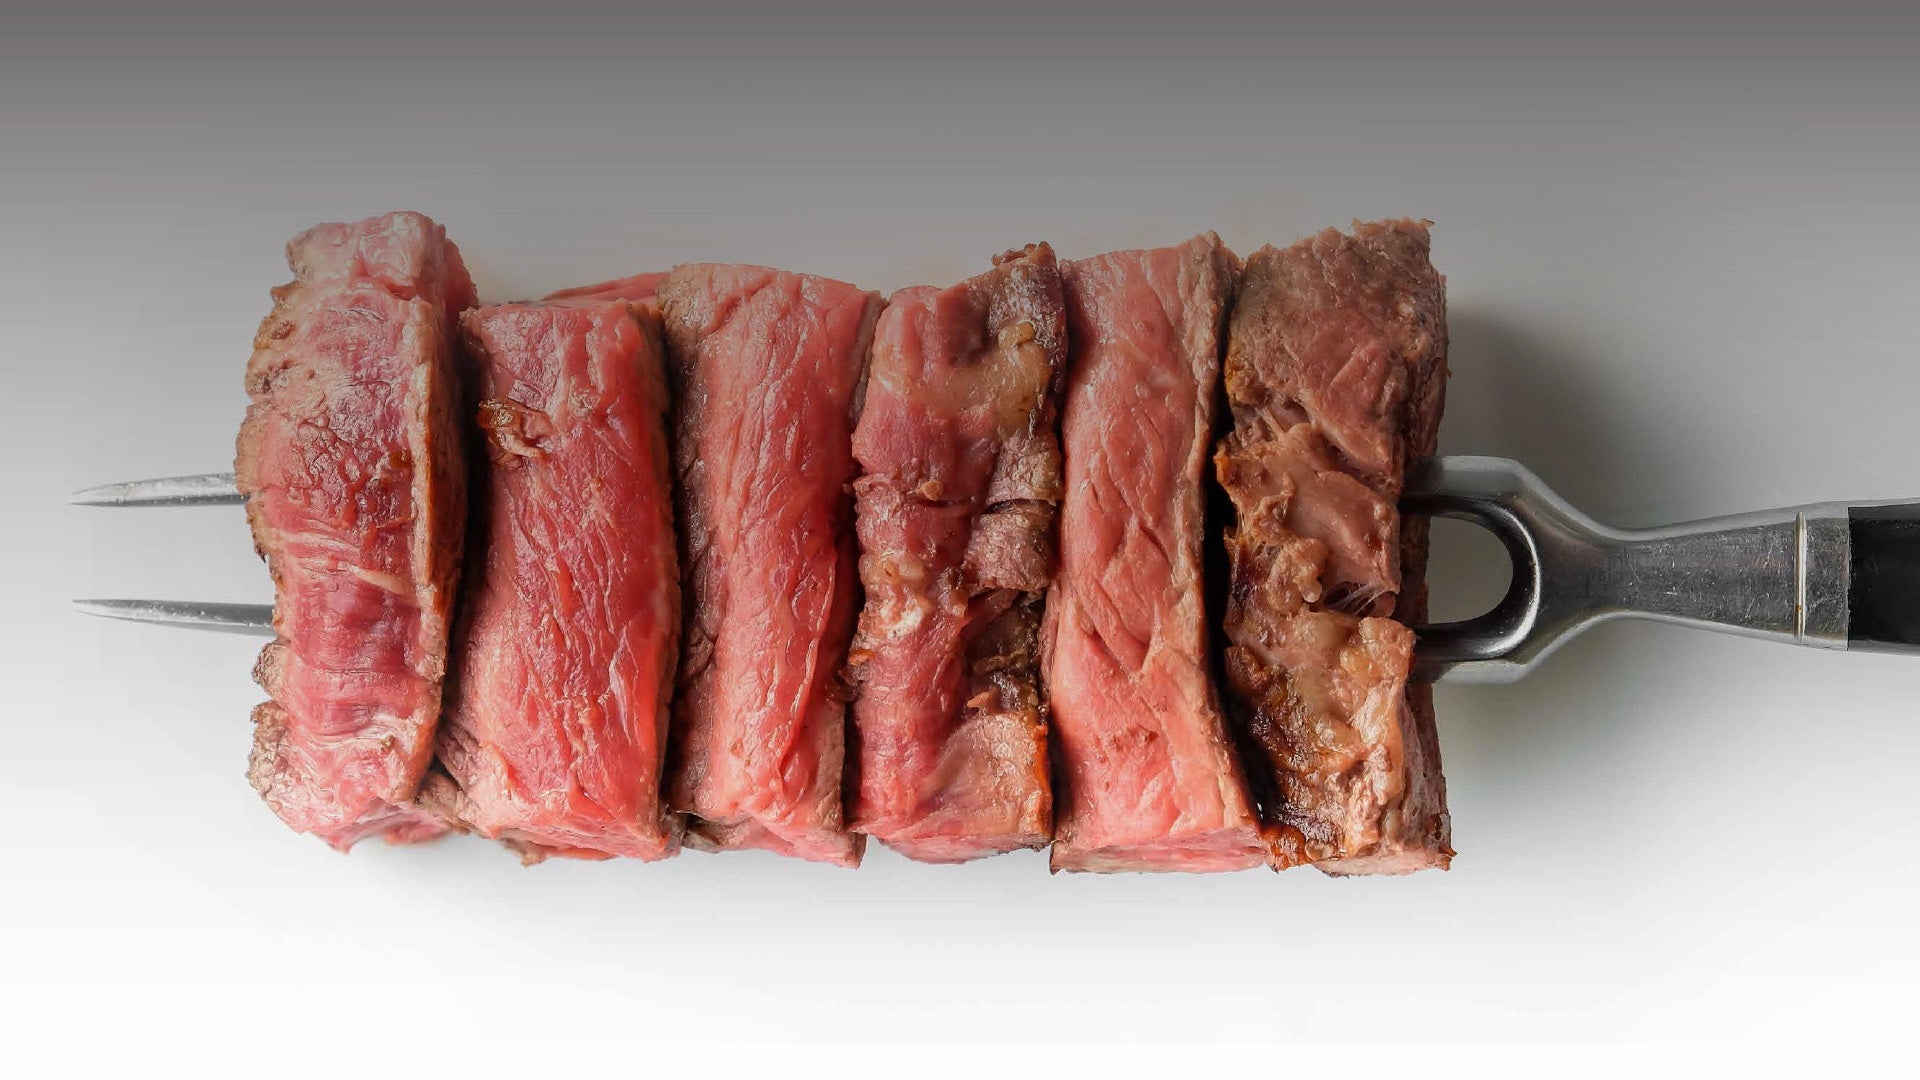 Steak Temperature Guide: Medium Rare, Rare, or Well Done